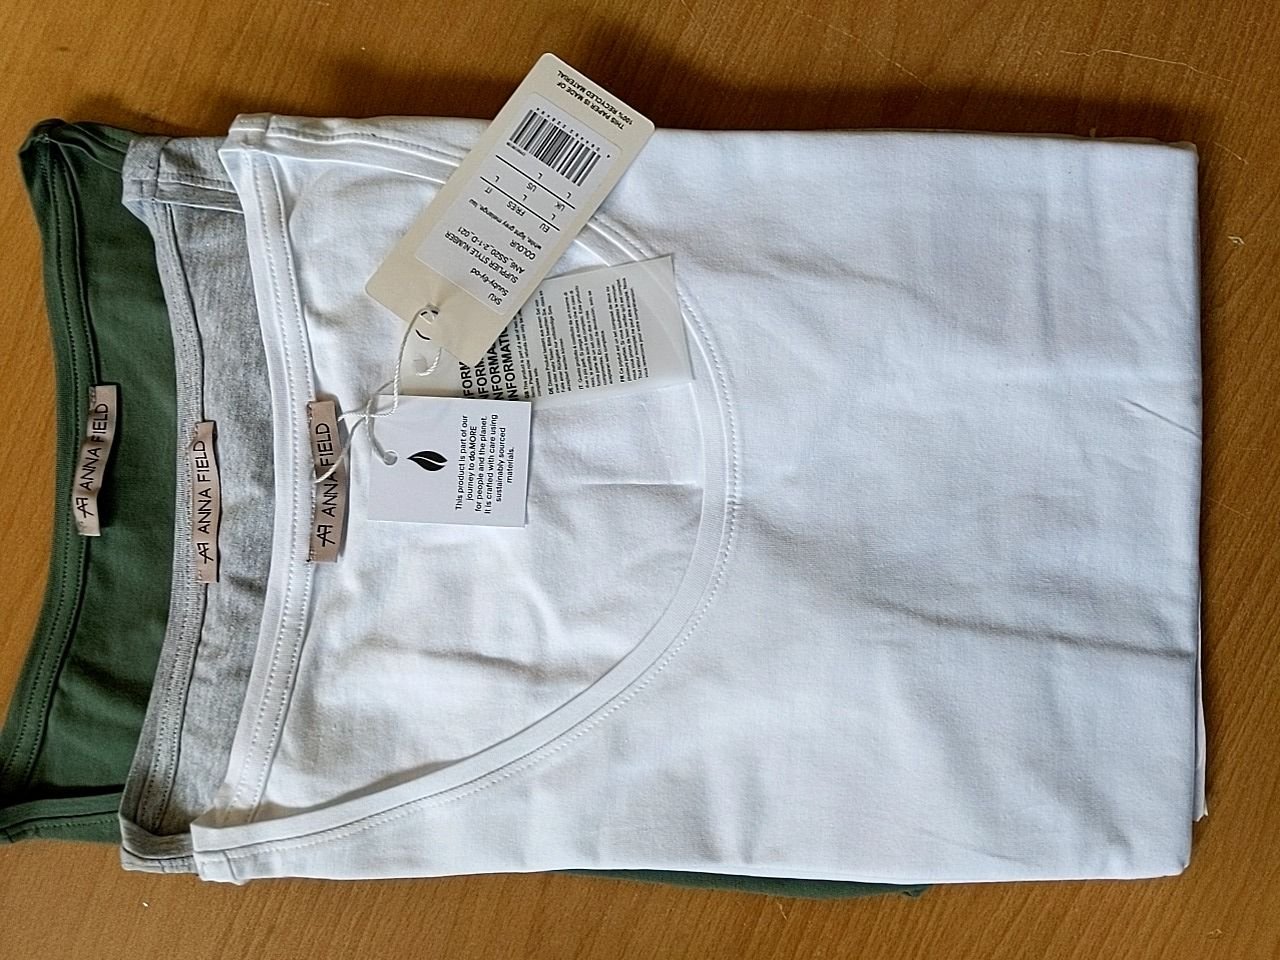 dámské triko ANNA FIELD komplet 3 triček - barva zelená, šedá, bílá ; velikost L